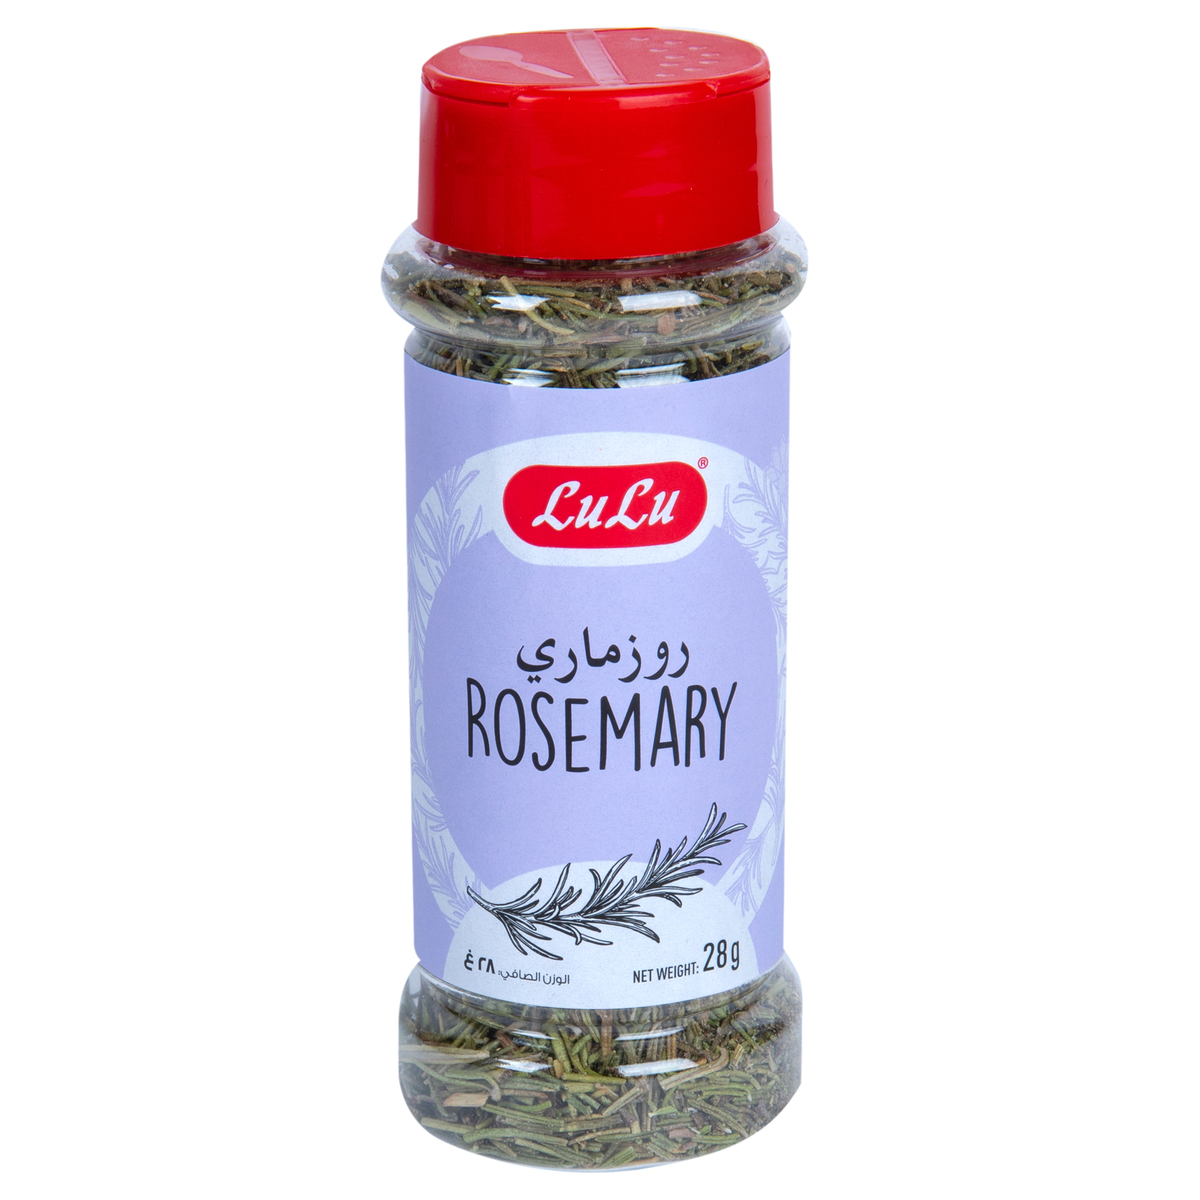 LuLu Rosemary 28 g